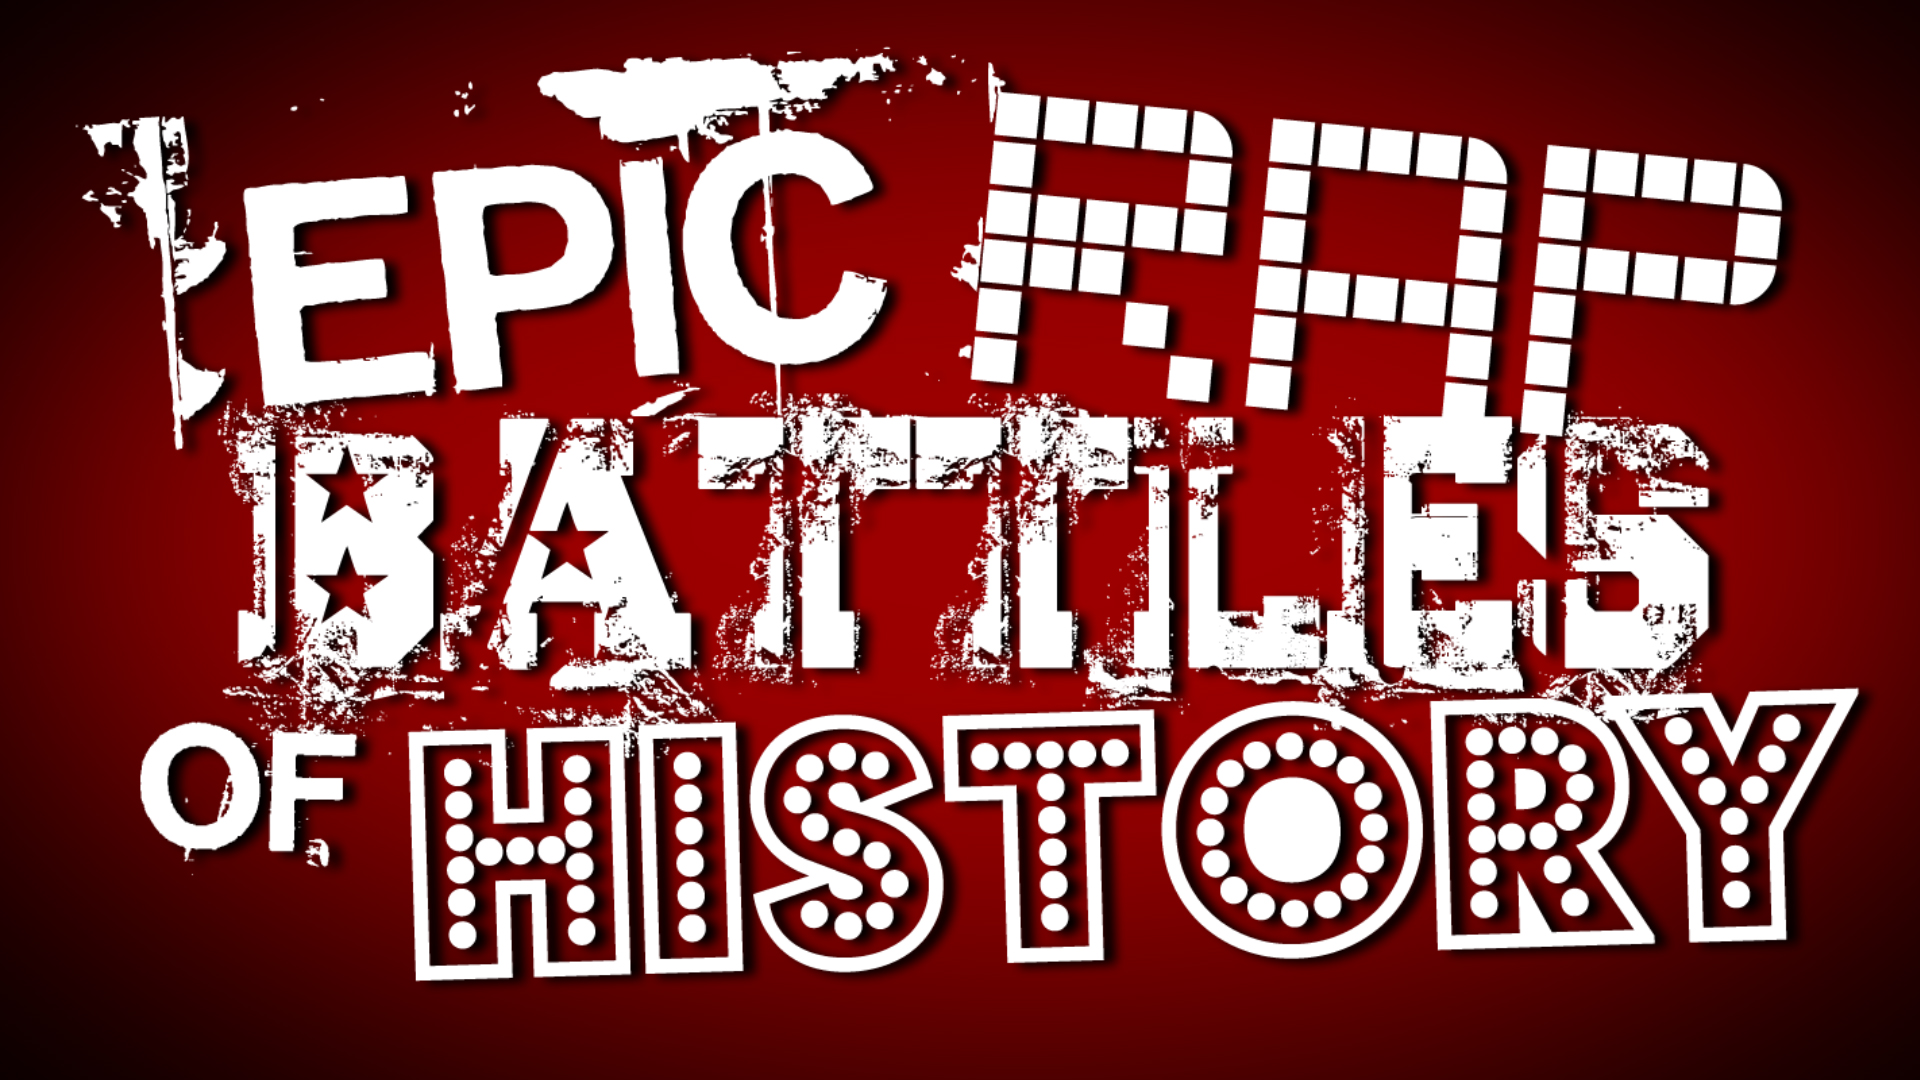 epic rap battles of history